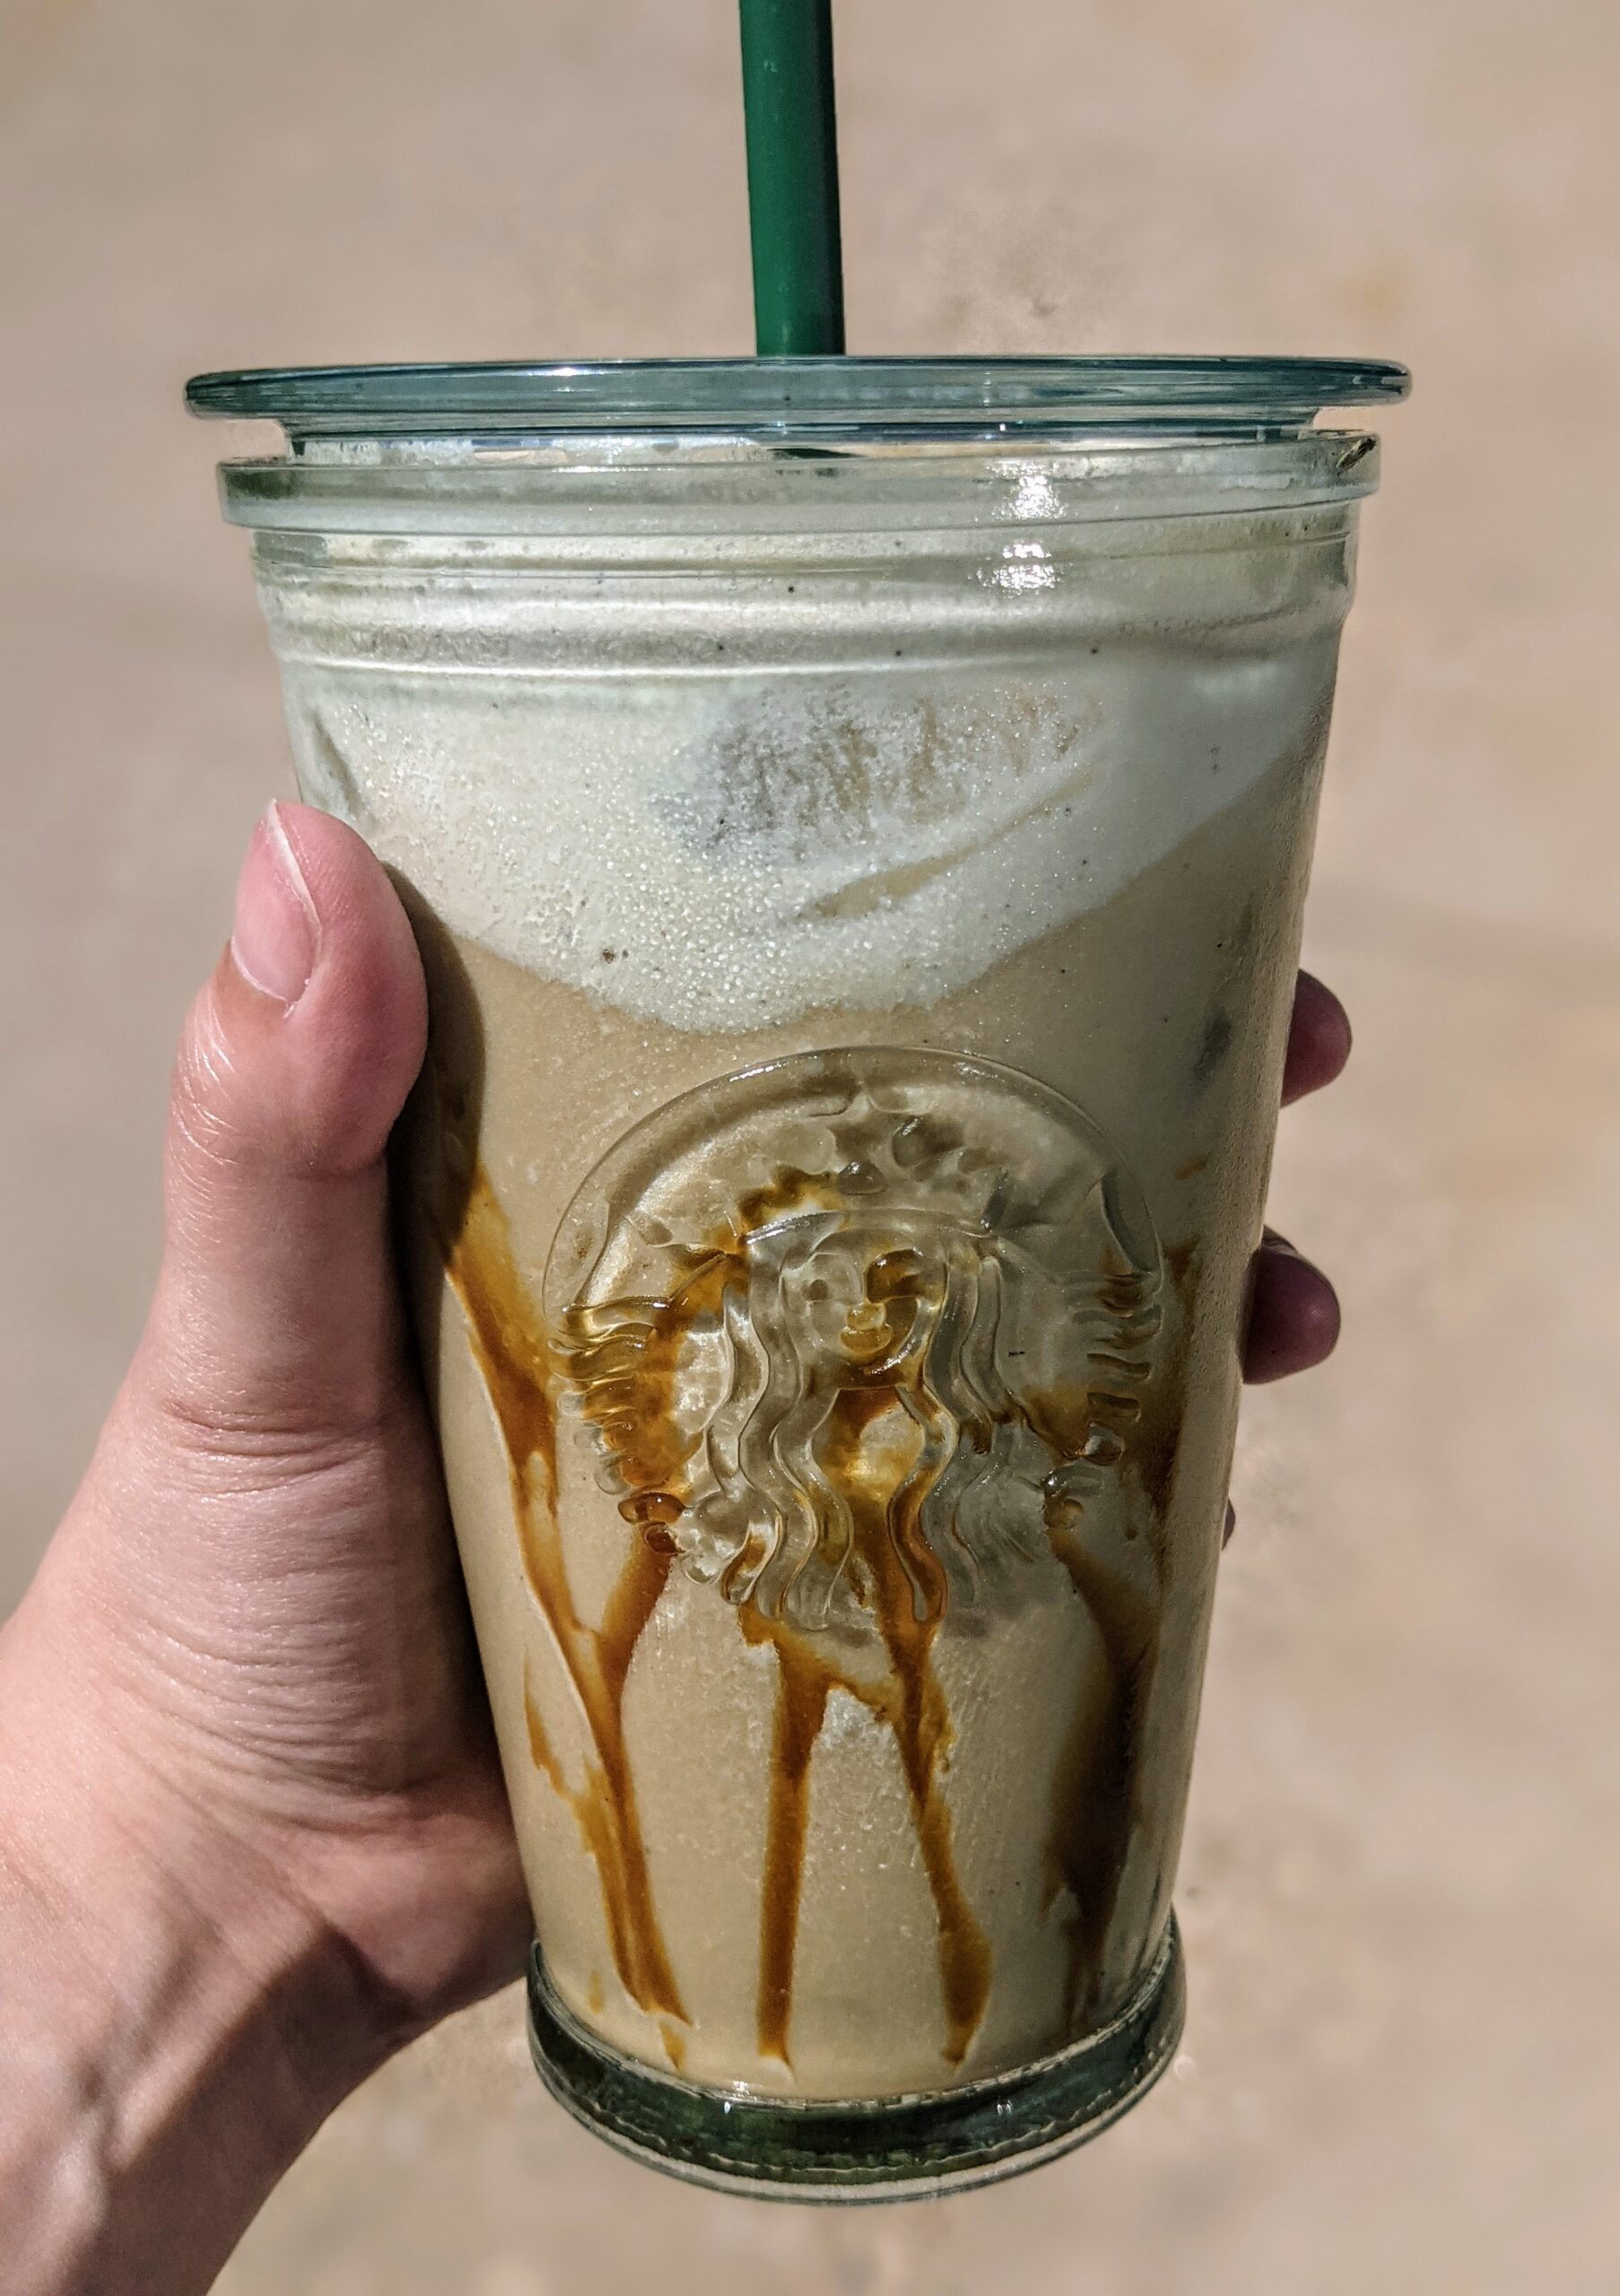 Ultimate Iced Coffee Kit Coffee Syrup Set Starbucks Cold -  UK